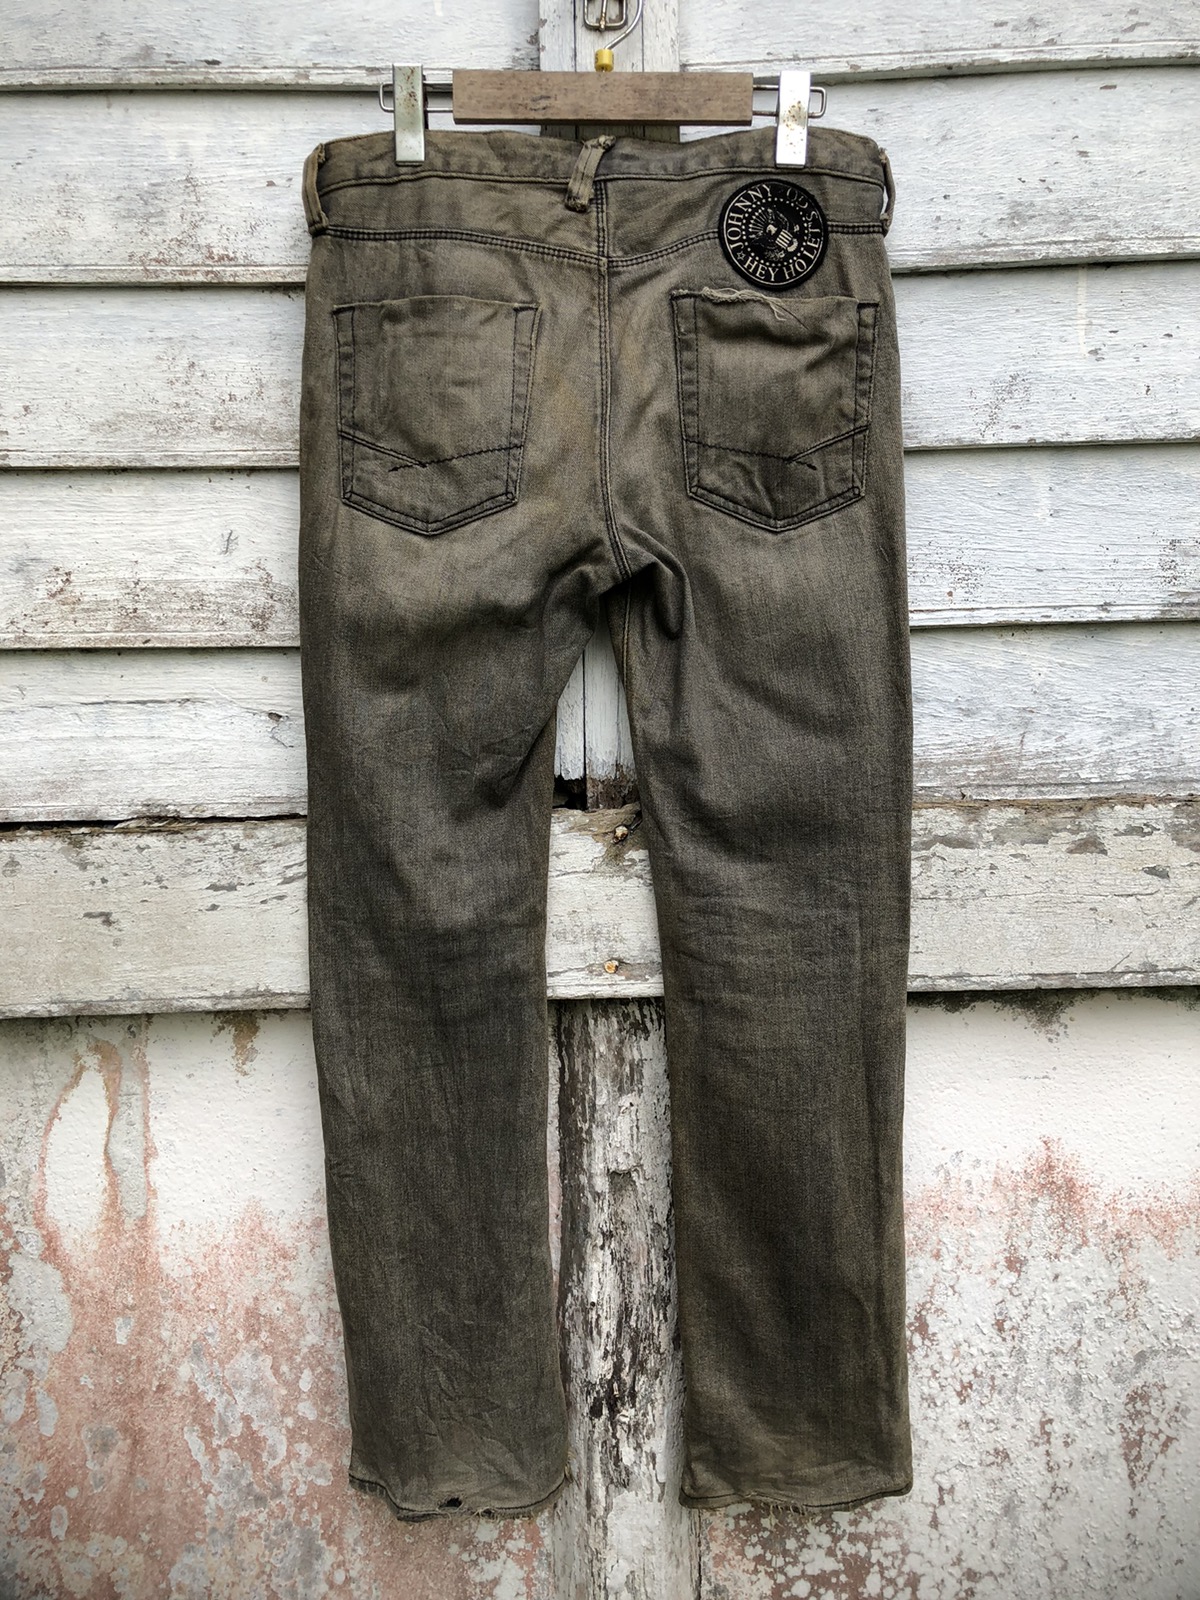 Vans Joey Ramone Black Rusty Washed Distressed Denim Pant - 3